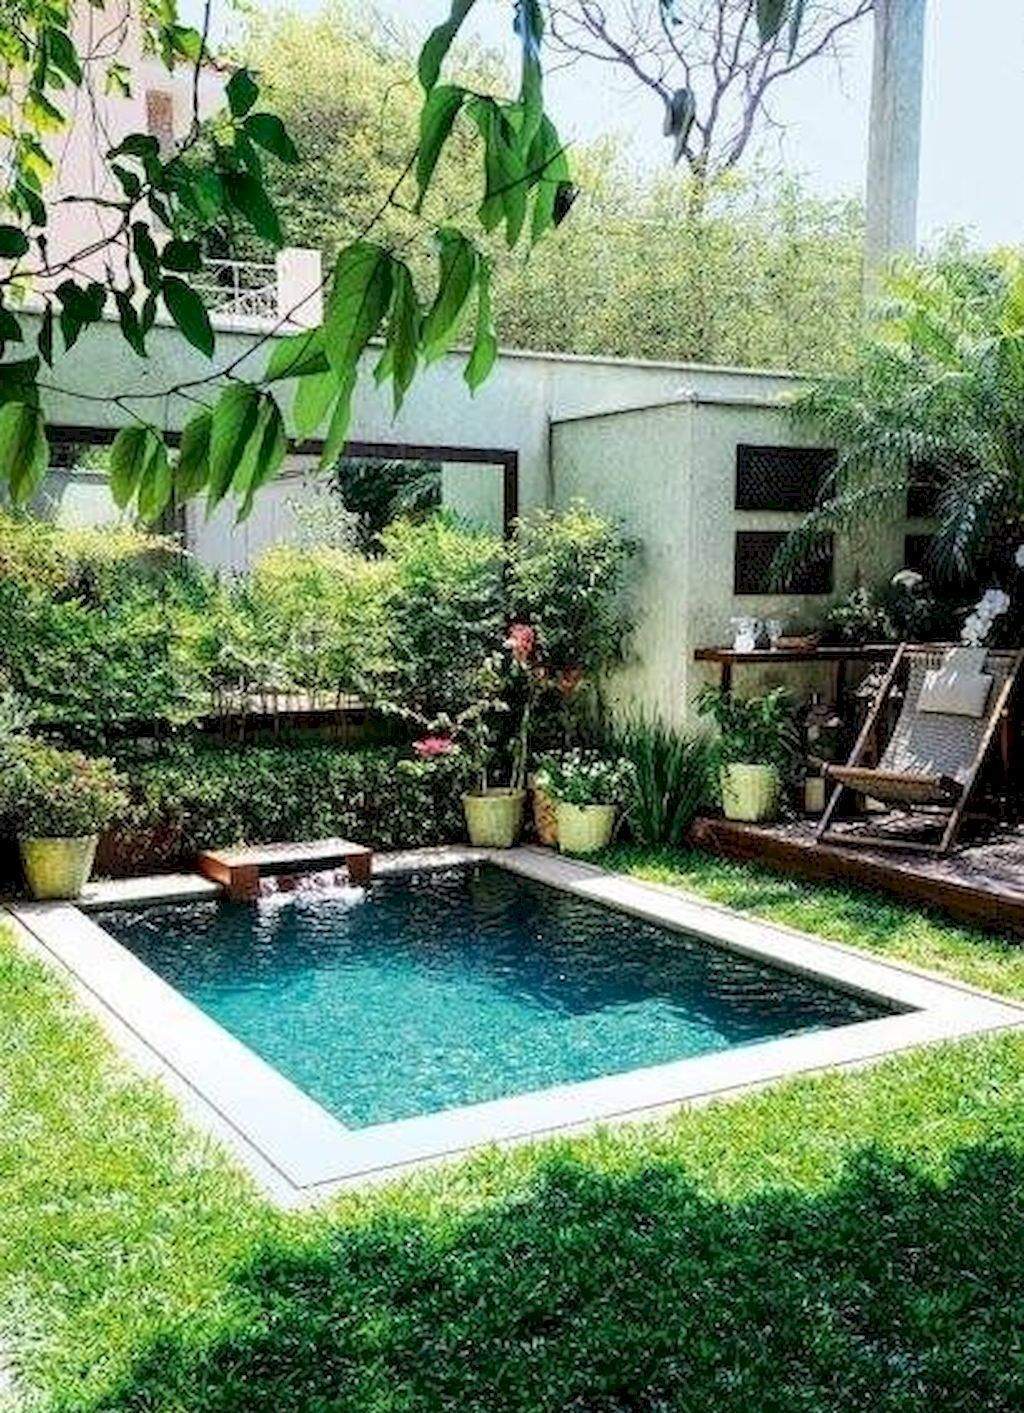 mini pool garten luxus swimming swimming pools bring to mind barbecue events a of mini pool garten